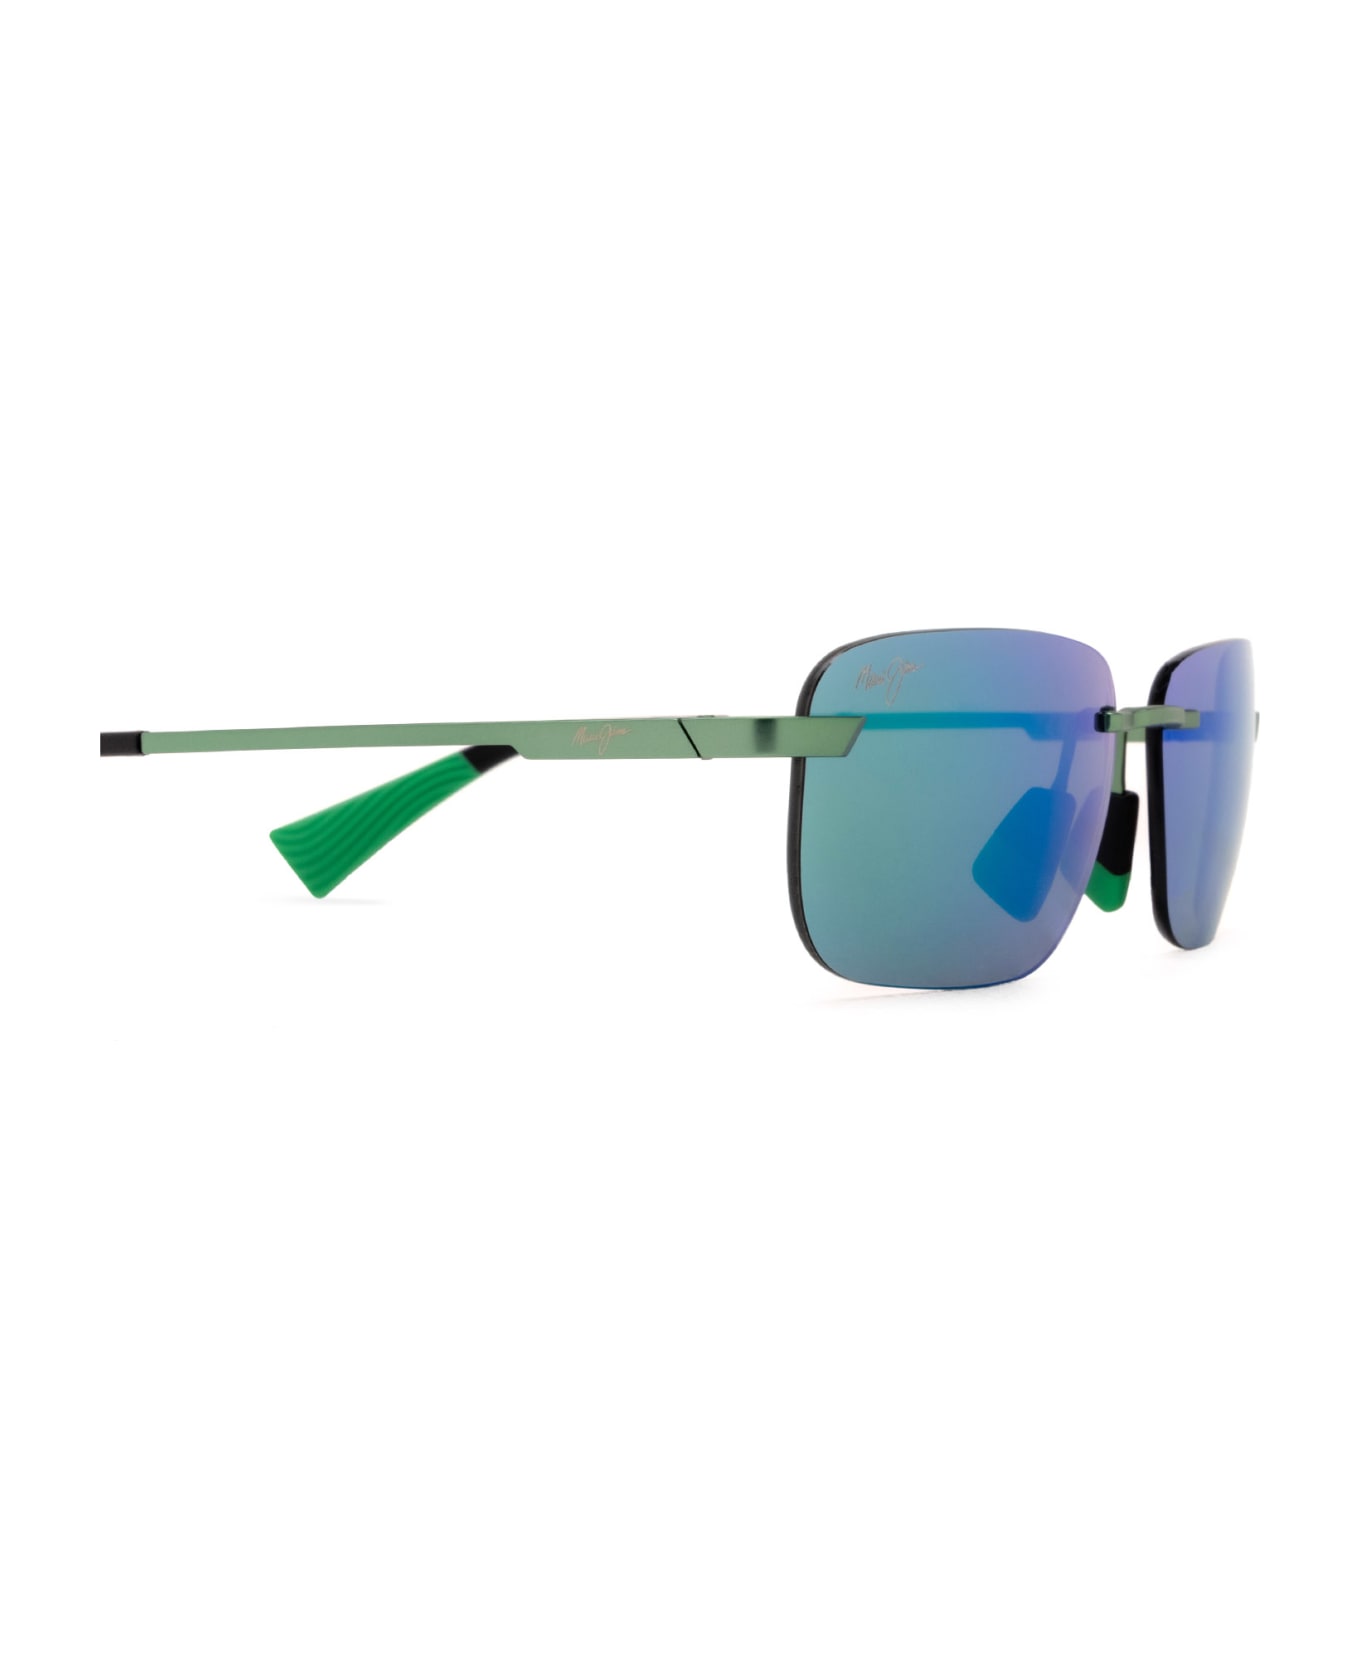 Maui Jim Mj624 Matte Trans Green Sunglasses - Matte Trans Green